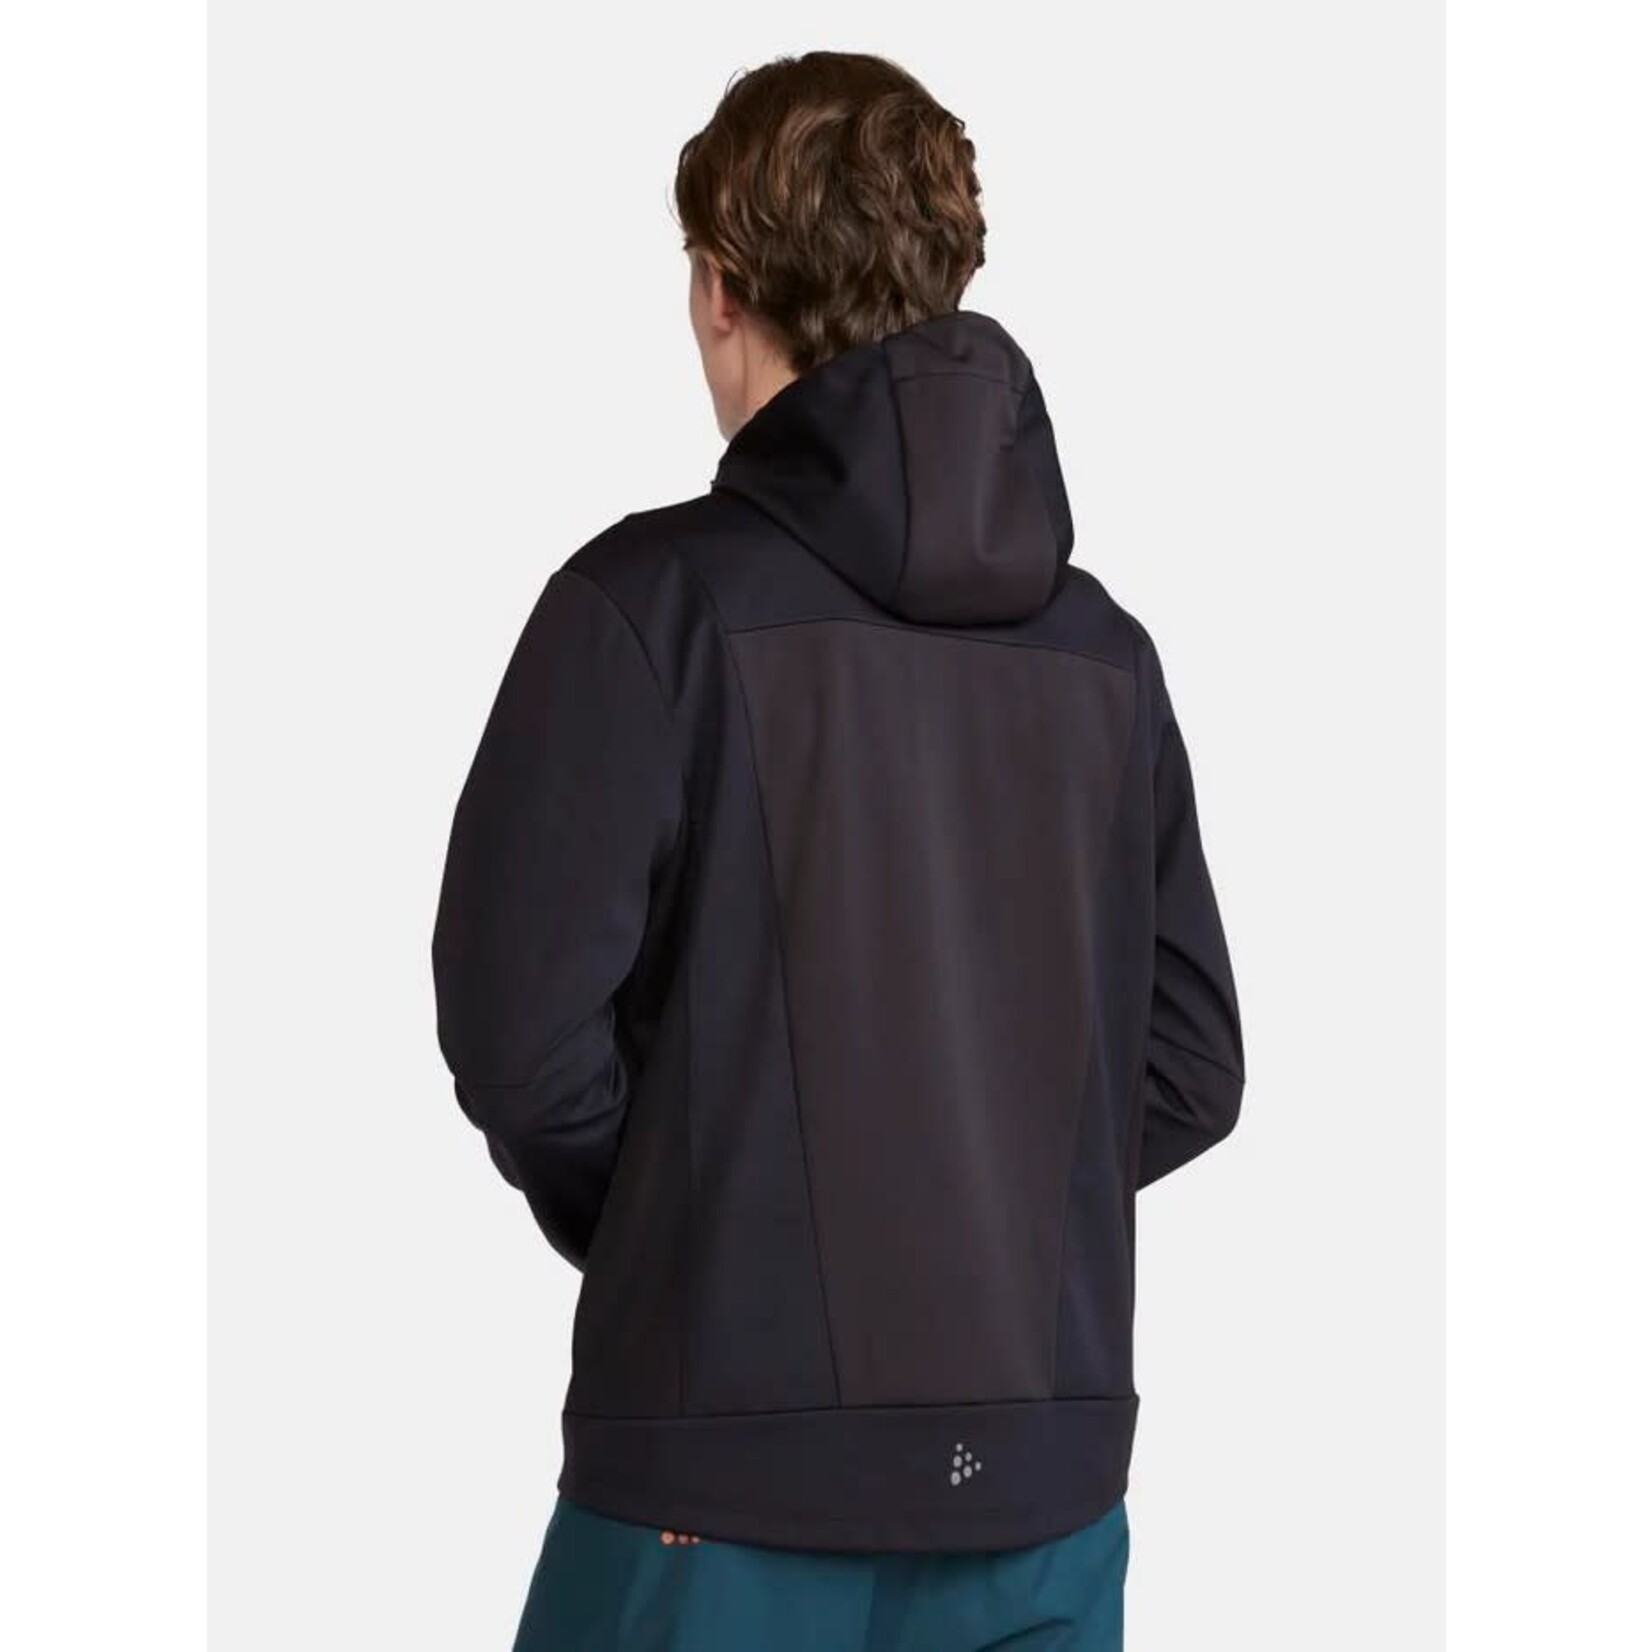 Craft Core Backcountry Hood Jacket M (manteau pour homme)